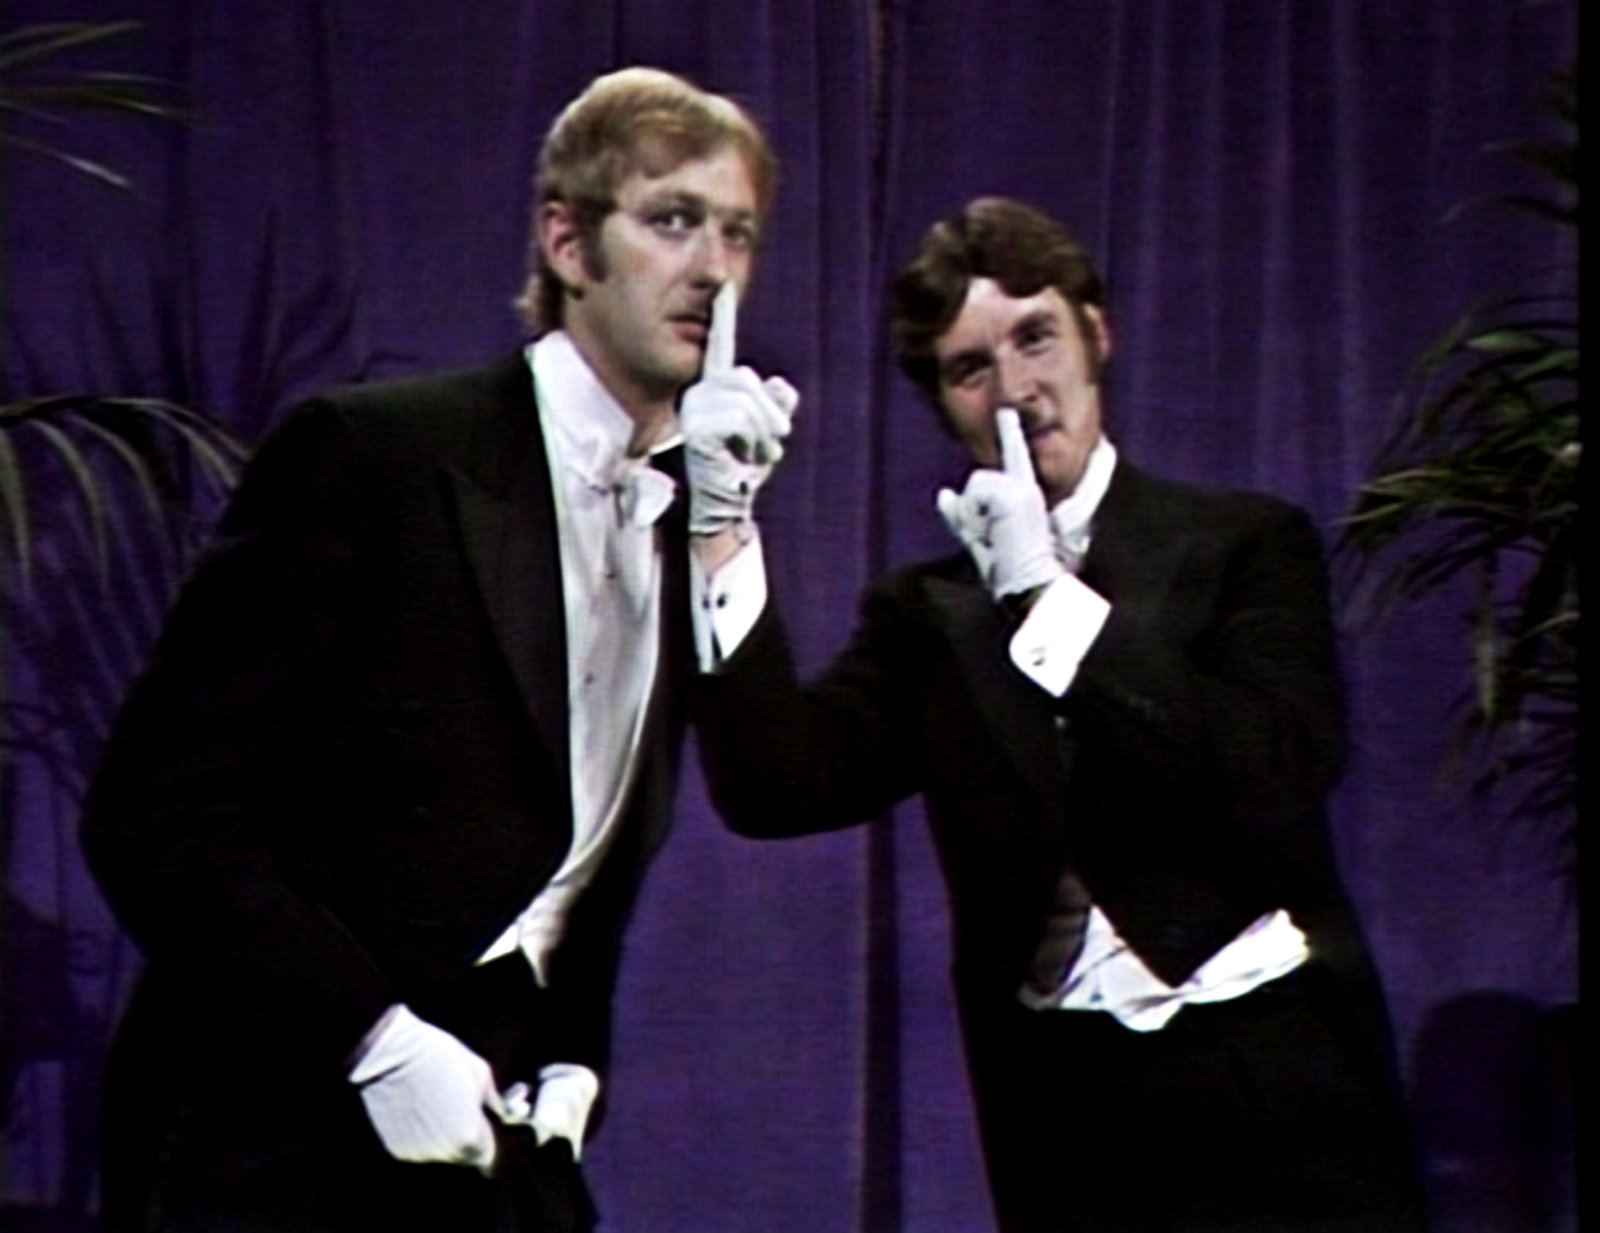 Monty Pythons Flying Circus - Die komplette Serie 1-4 (blu-ray)